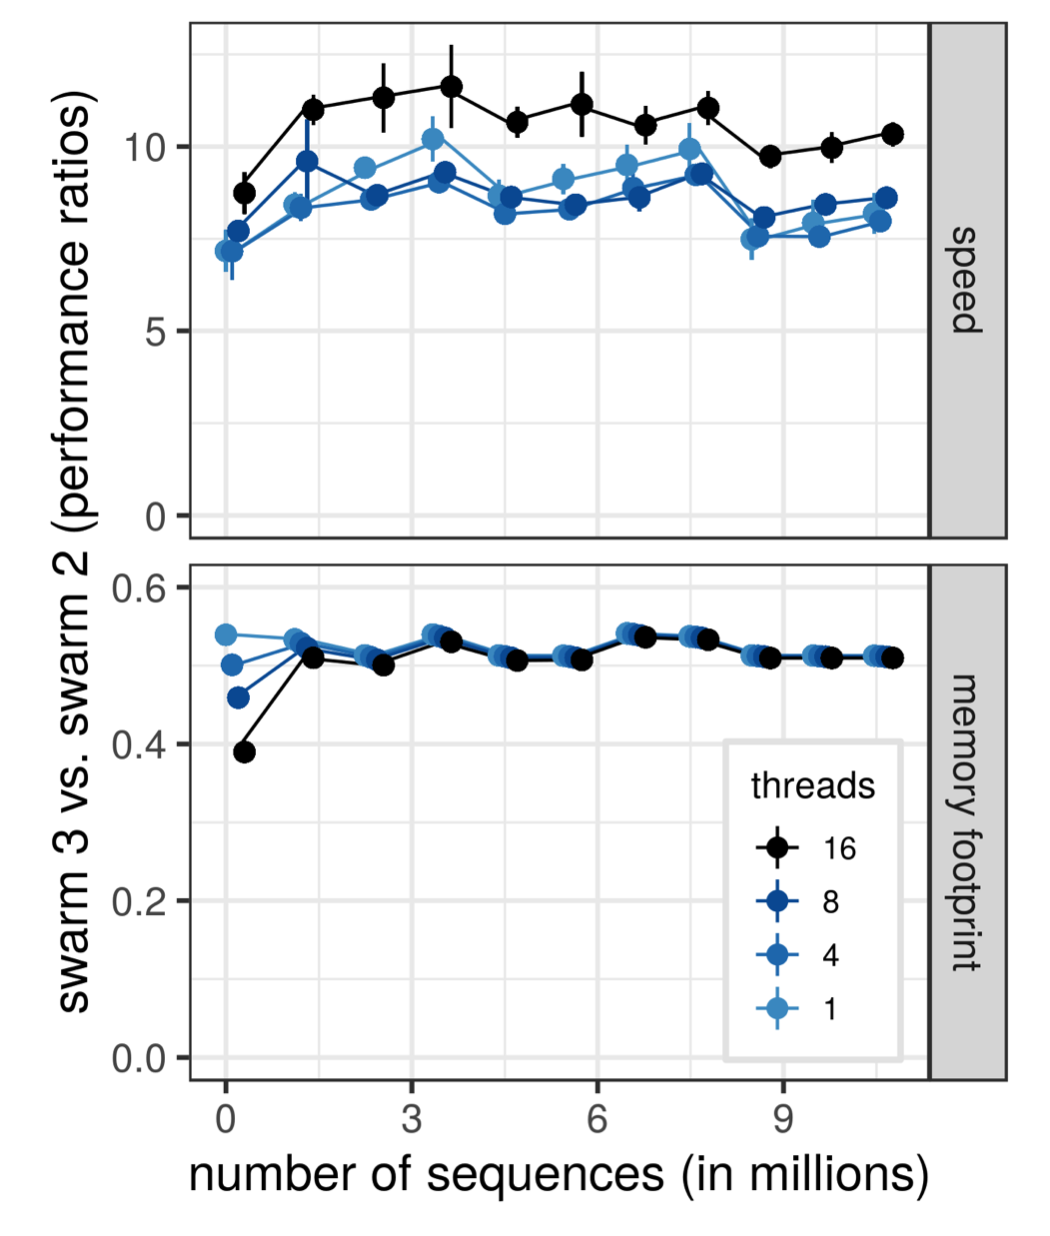 Performance improvement of swarm version 3 relative to version 2